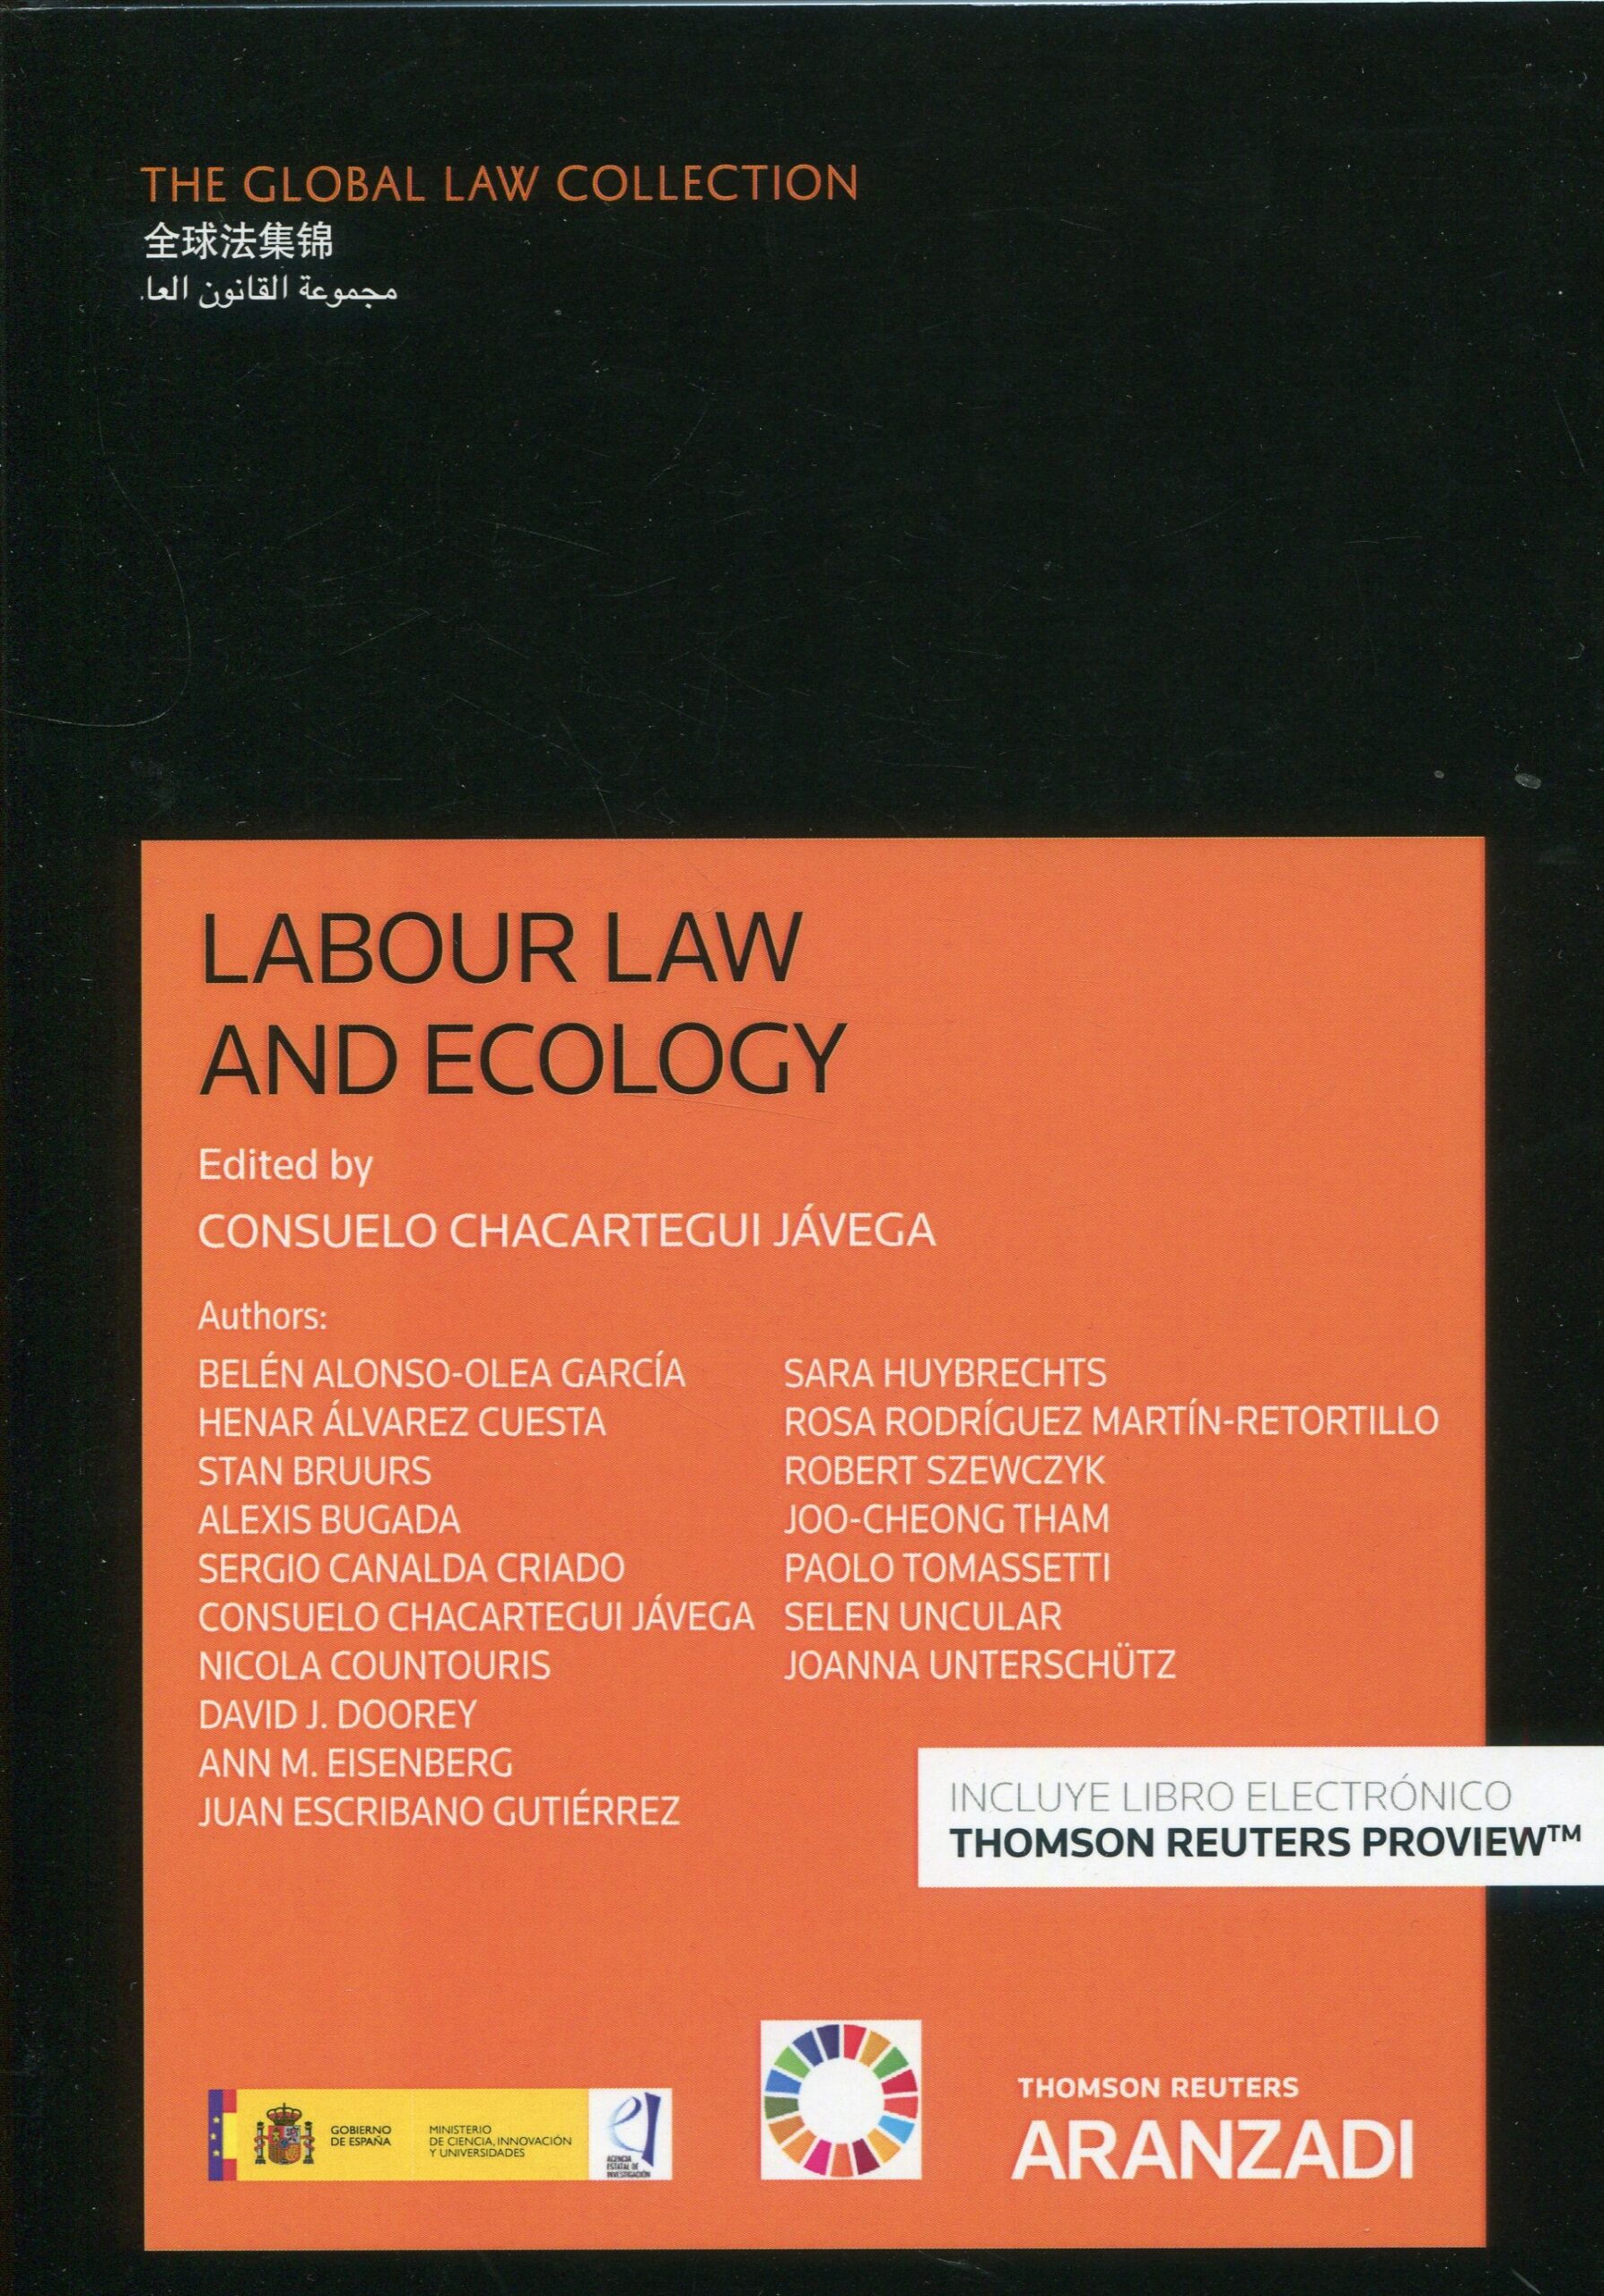 SEMINARI: Book Presentation: “Labour Law and Ecology